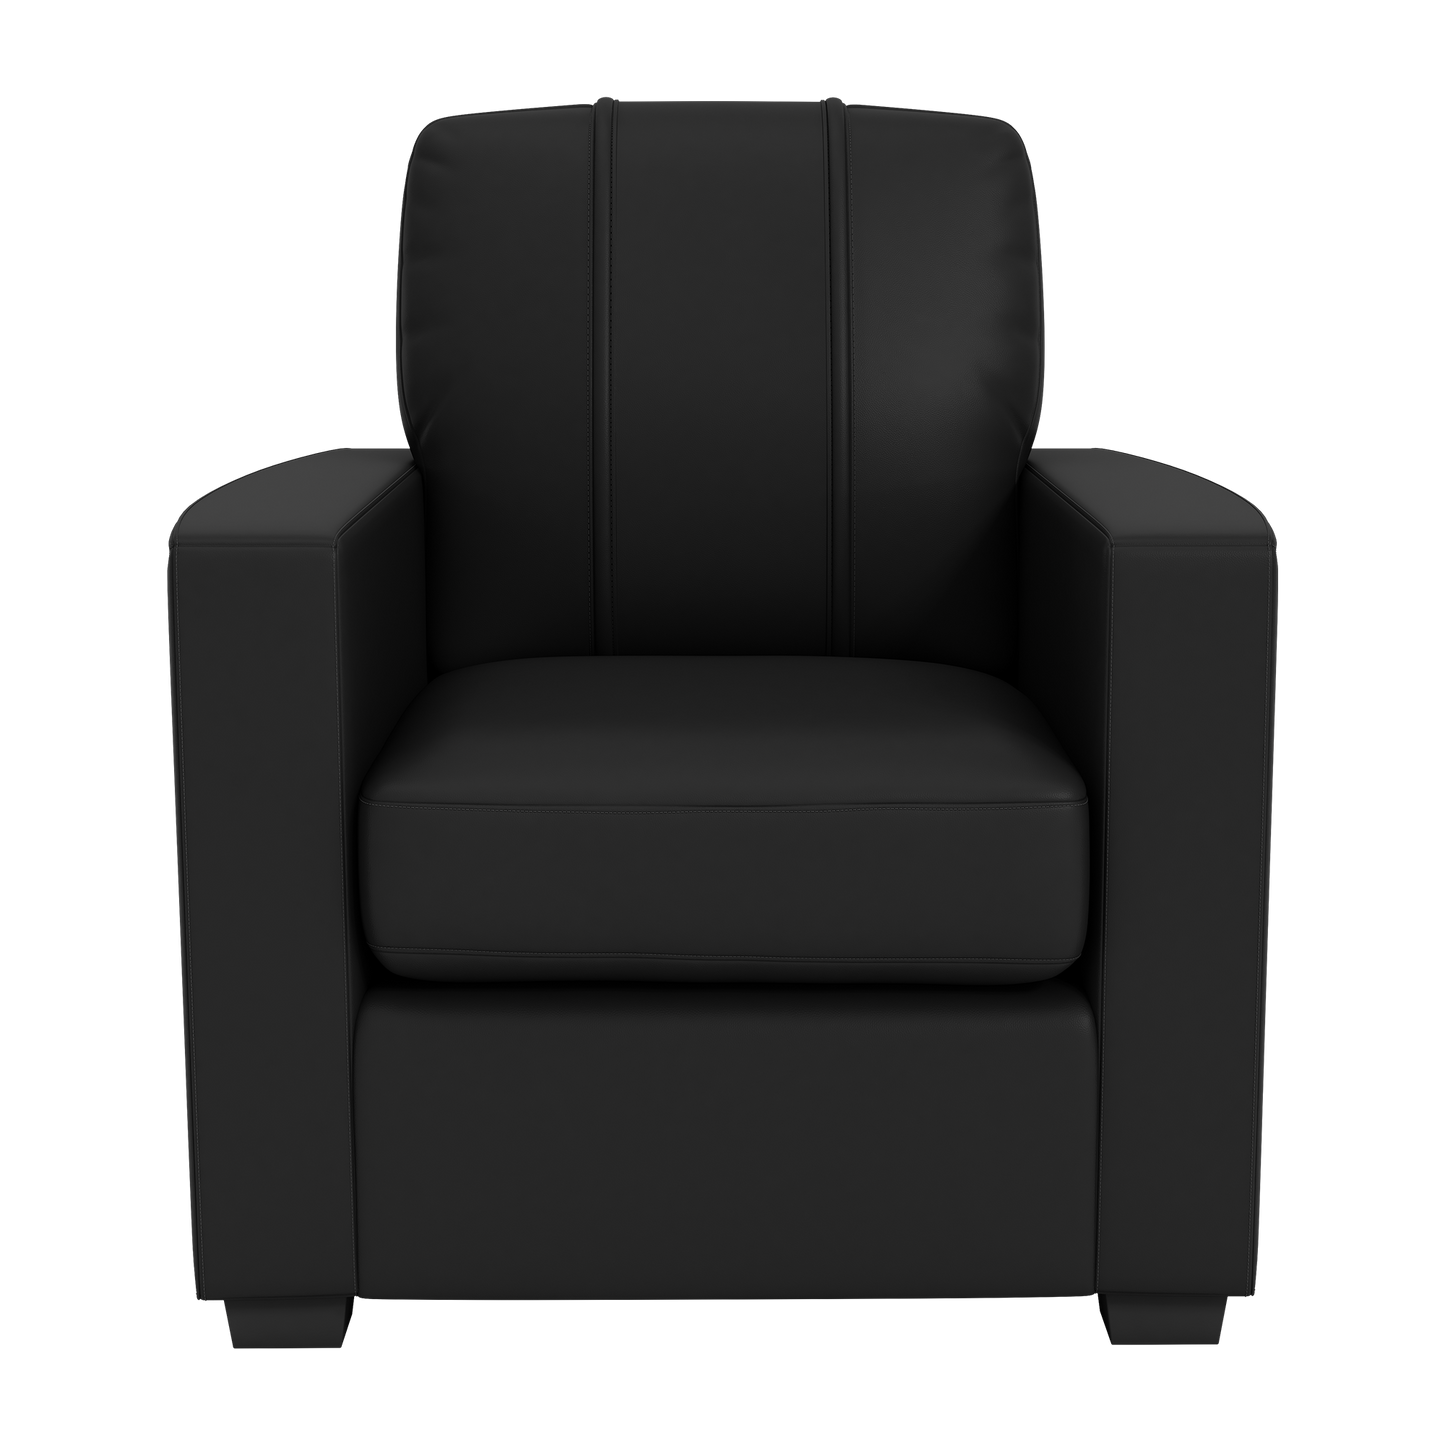 Silver Club Chair with  Seattle Seahawks Helmet Logo